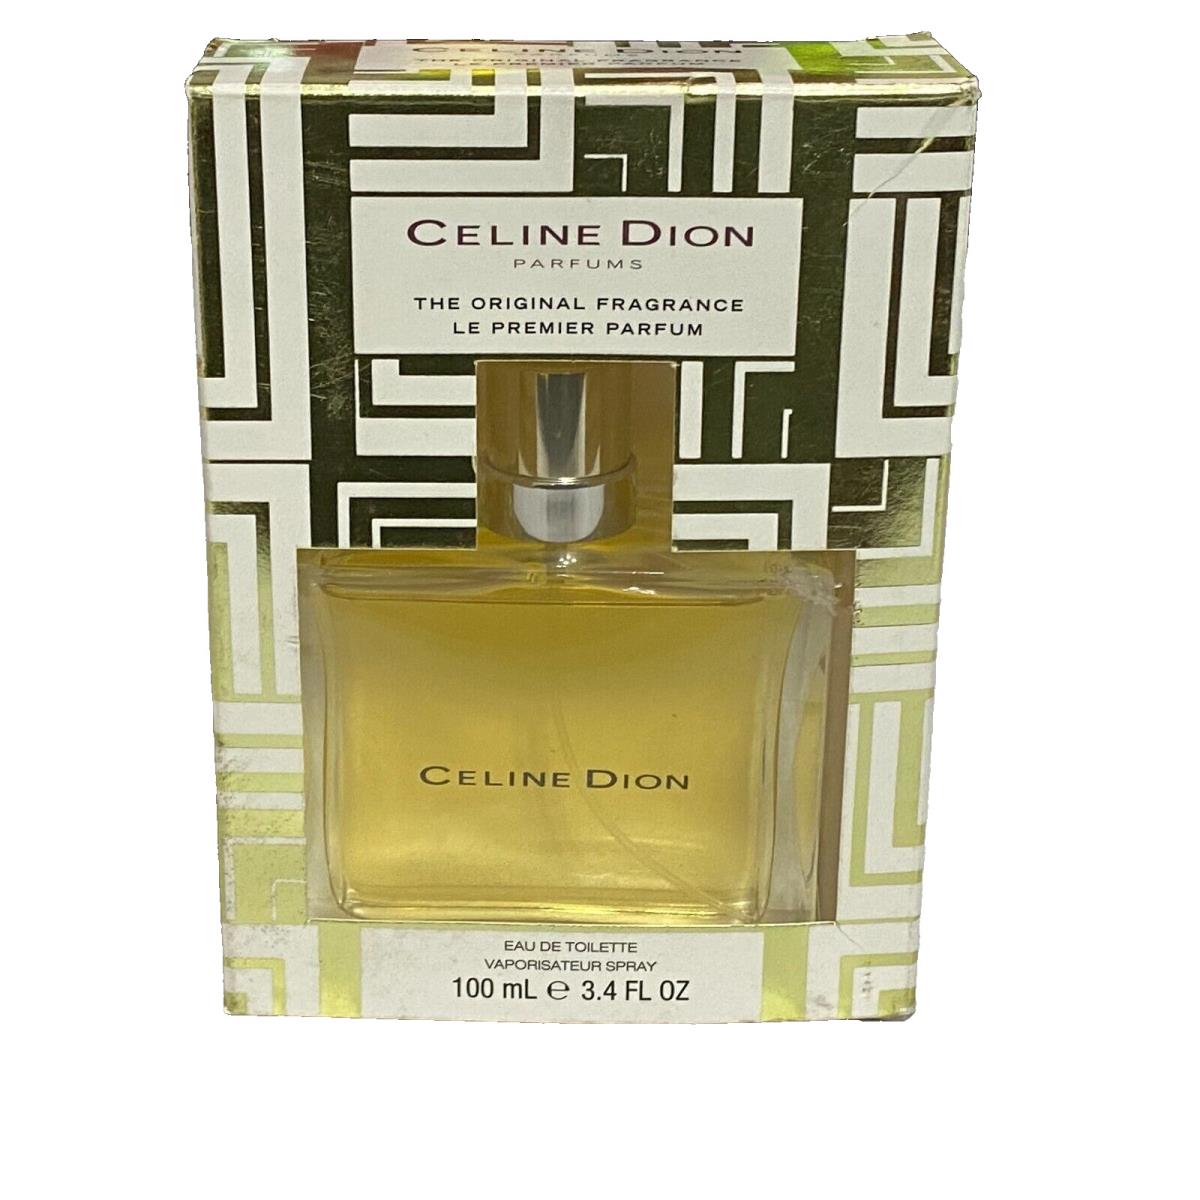 Celine Dion Parfums By Celine Dion Edt Spray 3.4 oz / 100 ml For Women